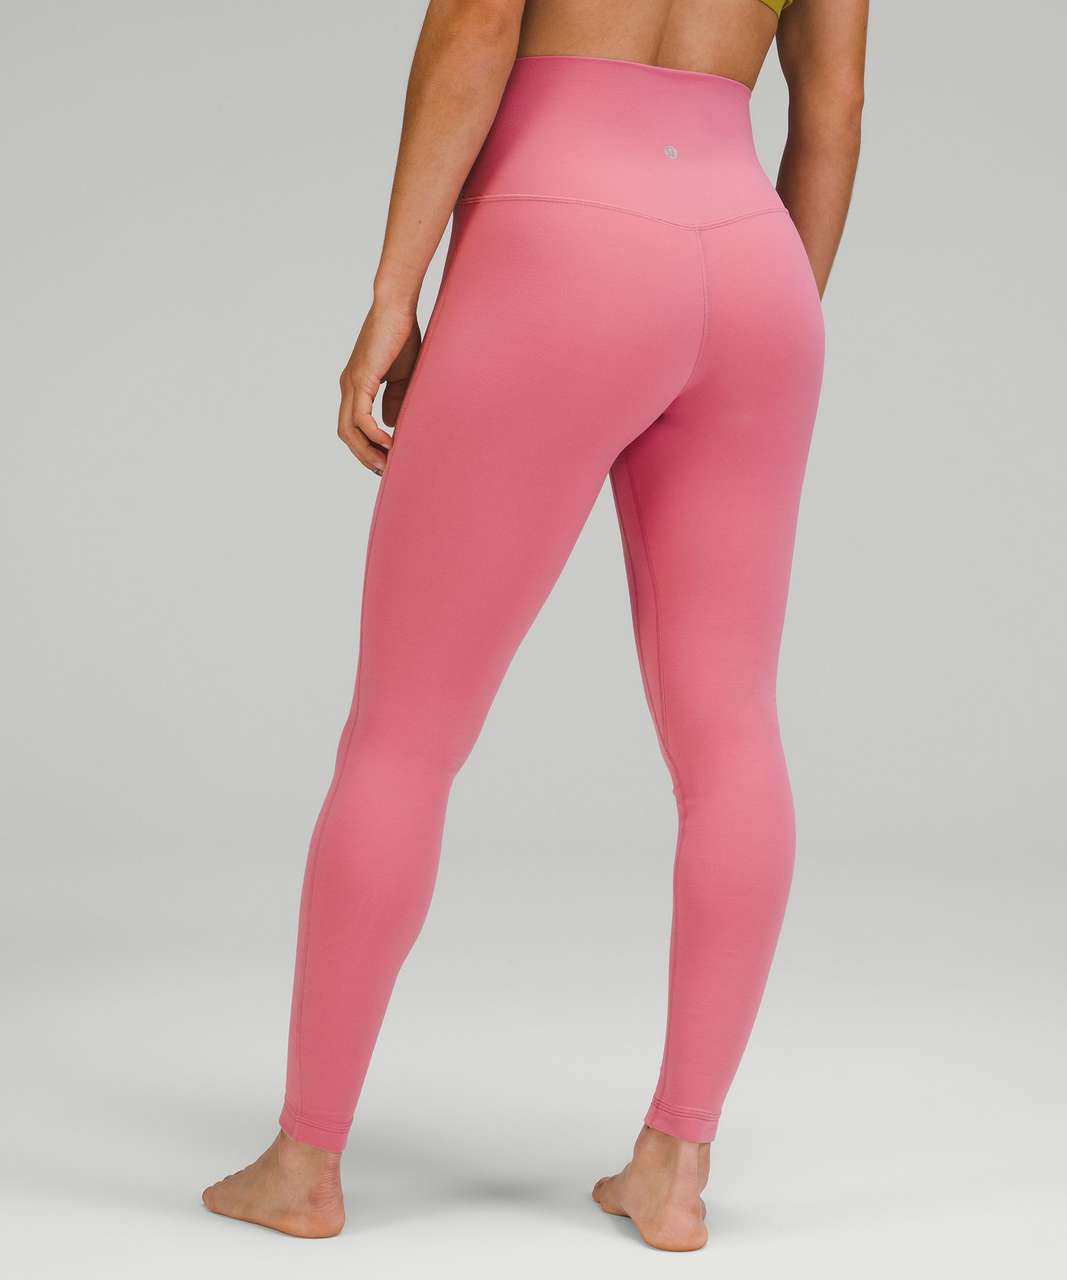 Lululemon Align High-Rise Pant 28" - Pink Blossom